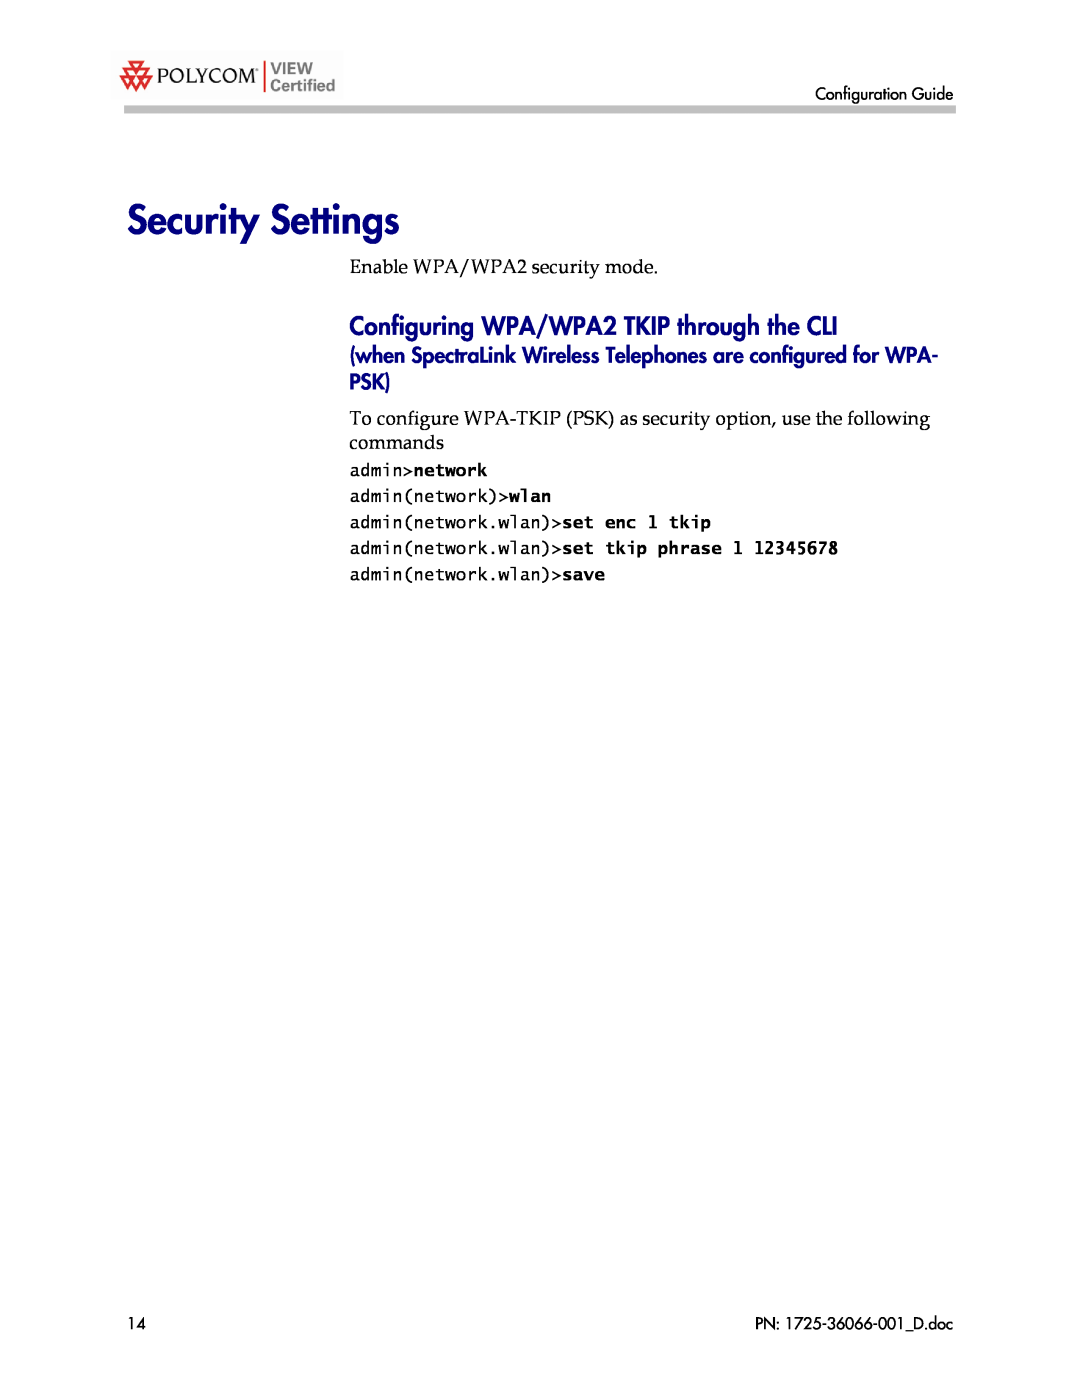 Motorola WS 2000 with AP 300 manual Security Settings, Configuring WPA/WPA2 TKIP through the CLI, admin network 